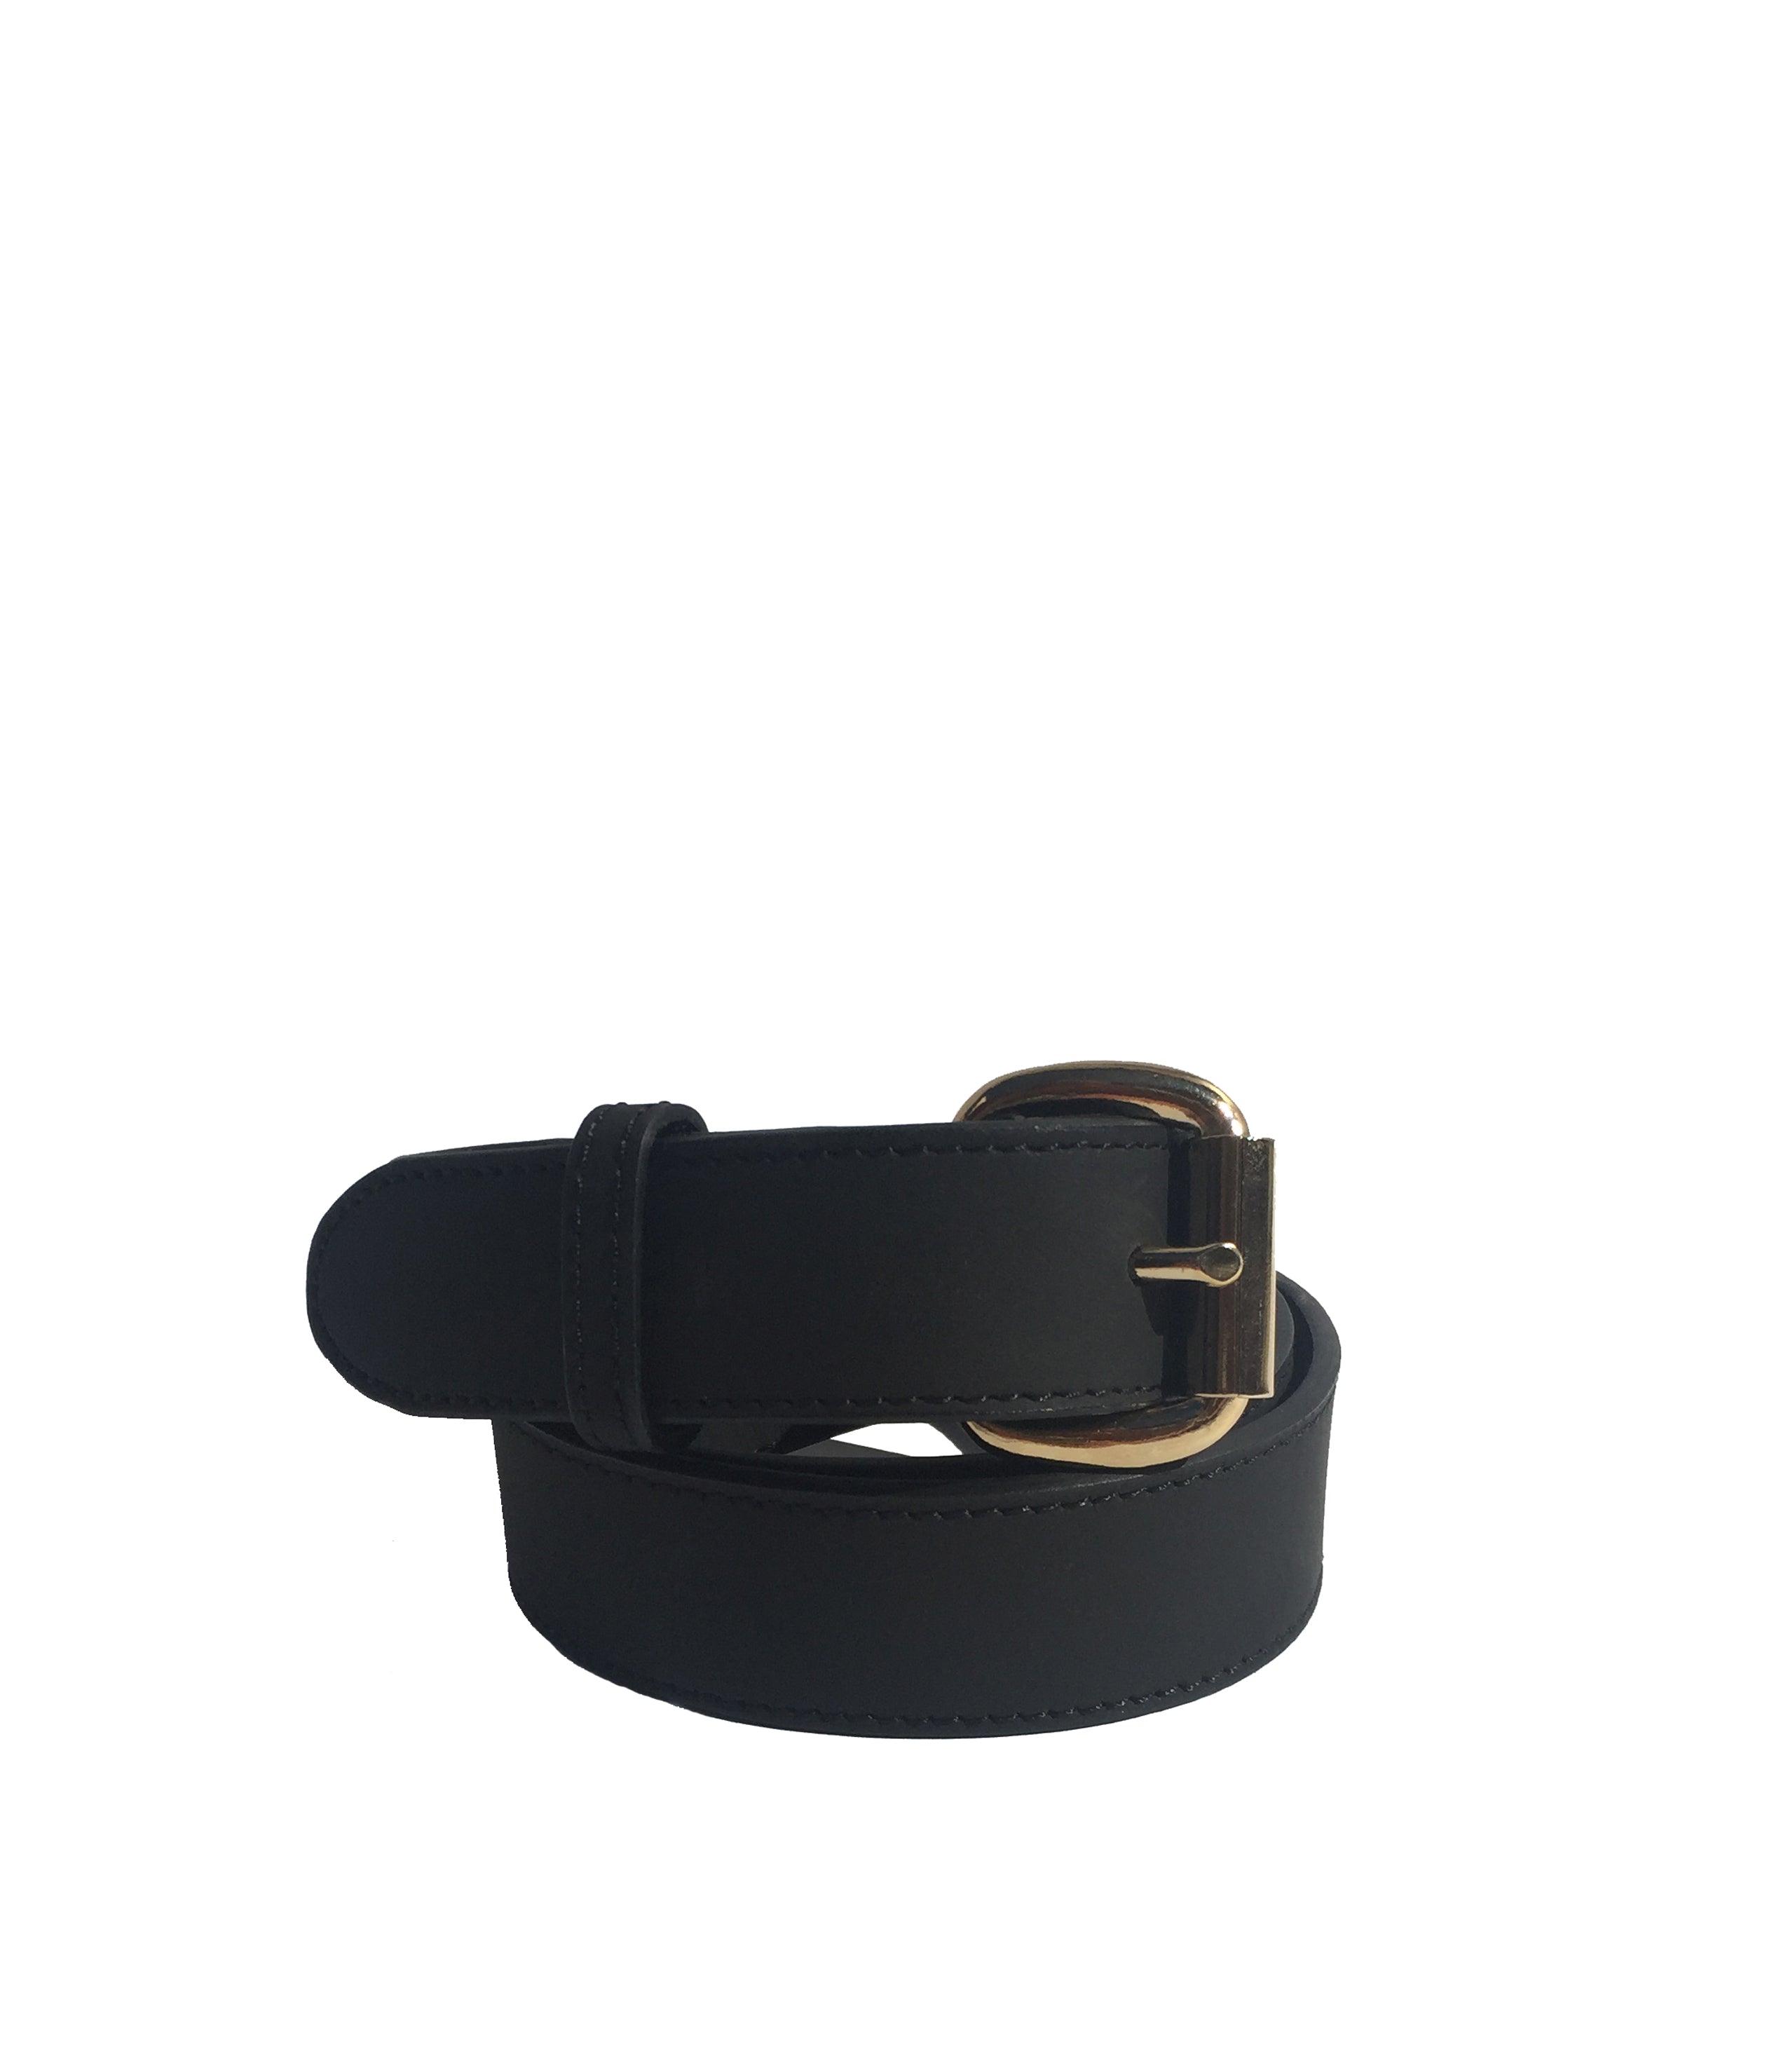 Black Leather Belt - Thalia Strates